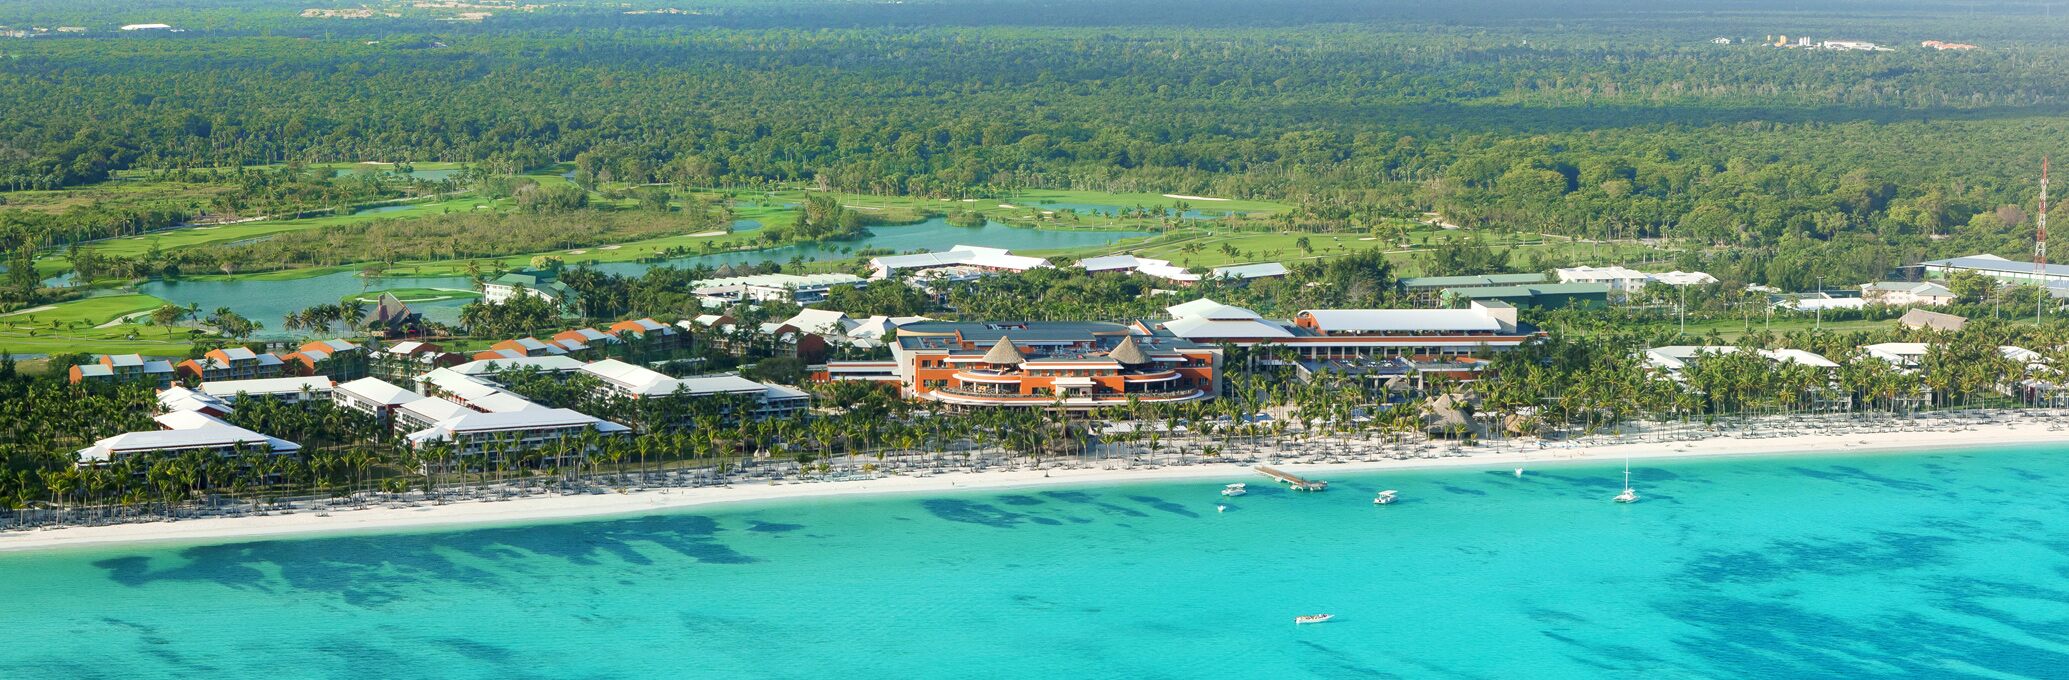 Barceló Bávaro Grand Resort: hotéis Praia Bavaro, Punta Cana